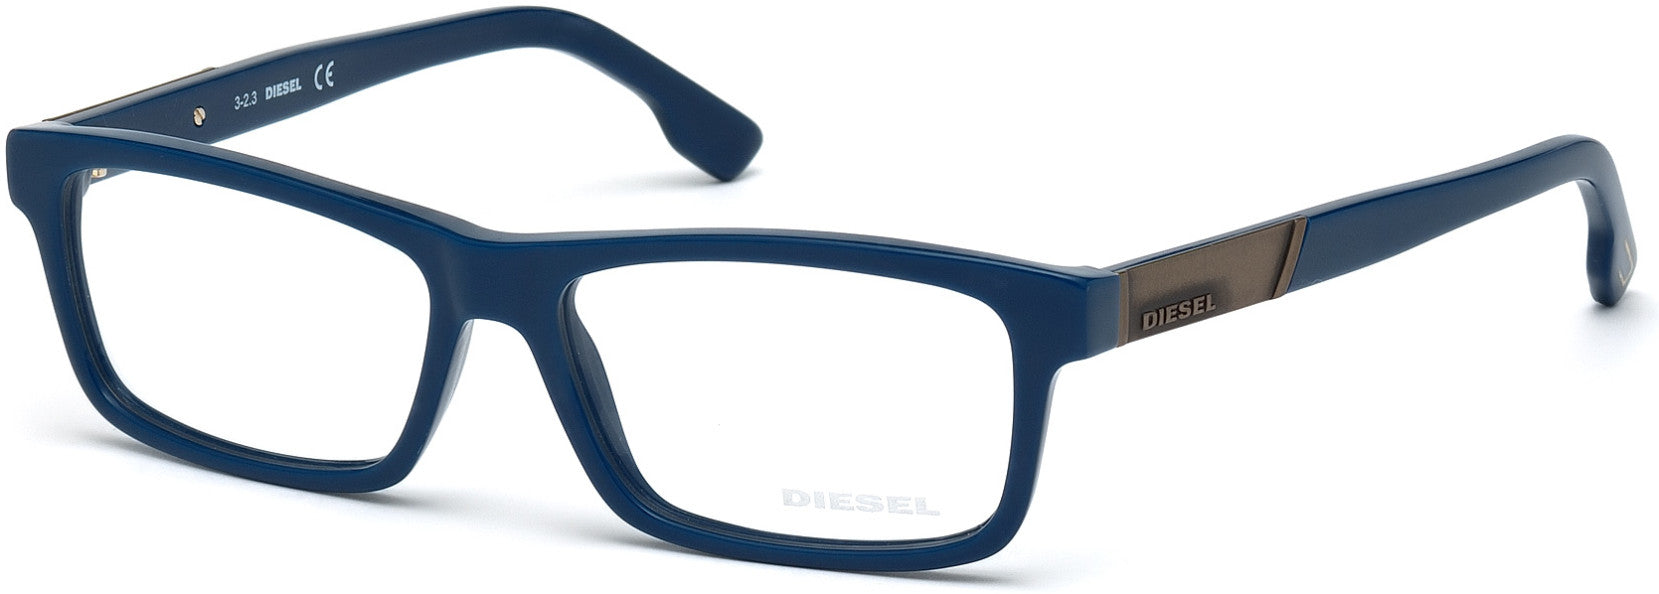 Diesel DL5090 Geometric Eyeglasses 090-090 - Shiny Blue